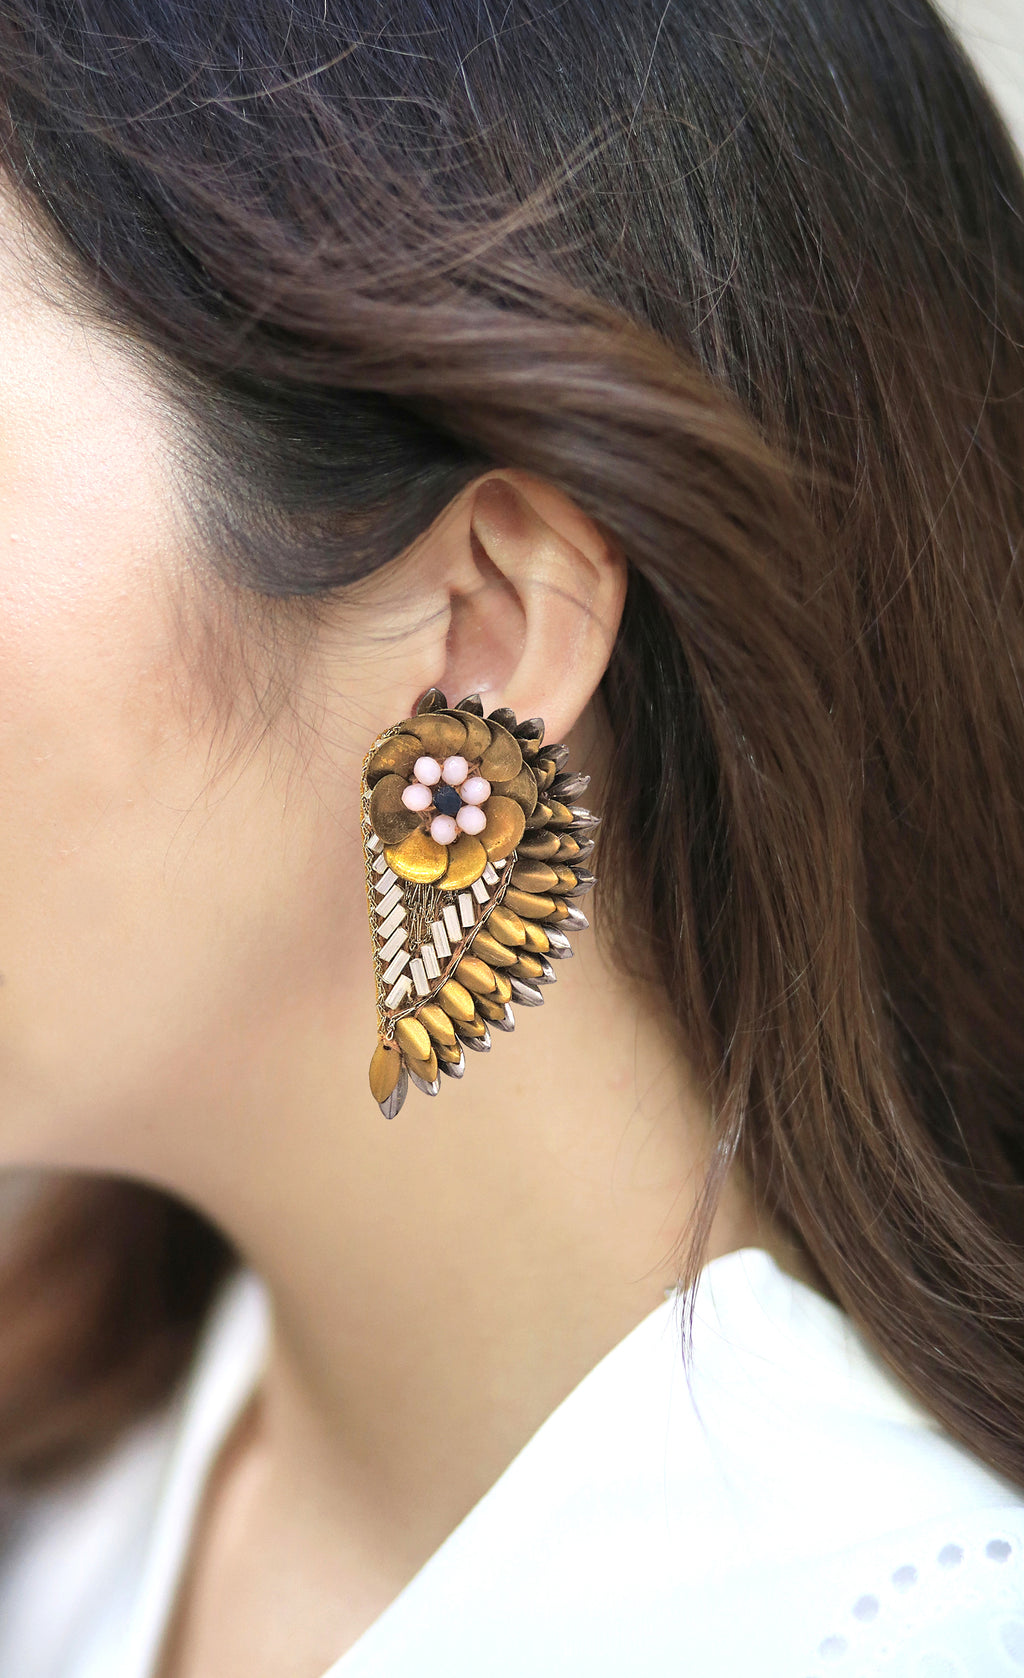 Flower Wing Earrings - Statement Earrings - Gold-Plated & Hypoallergenic - Made in India - Dubai Jewellery - Dori